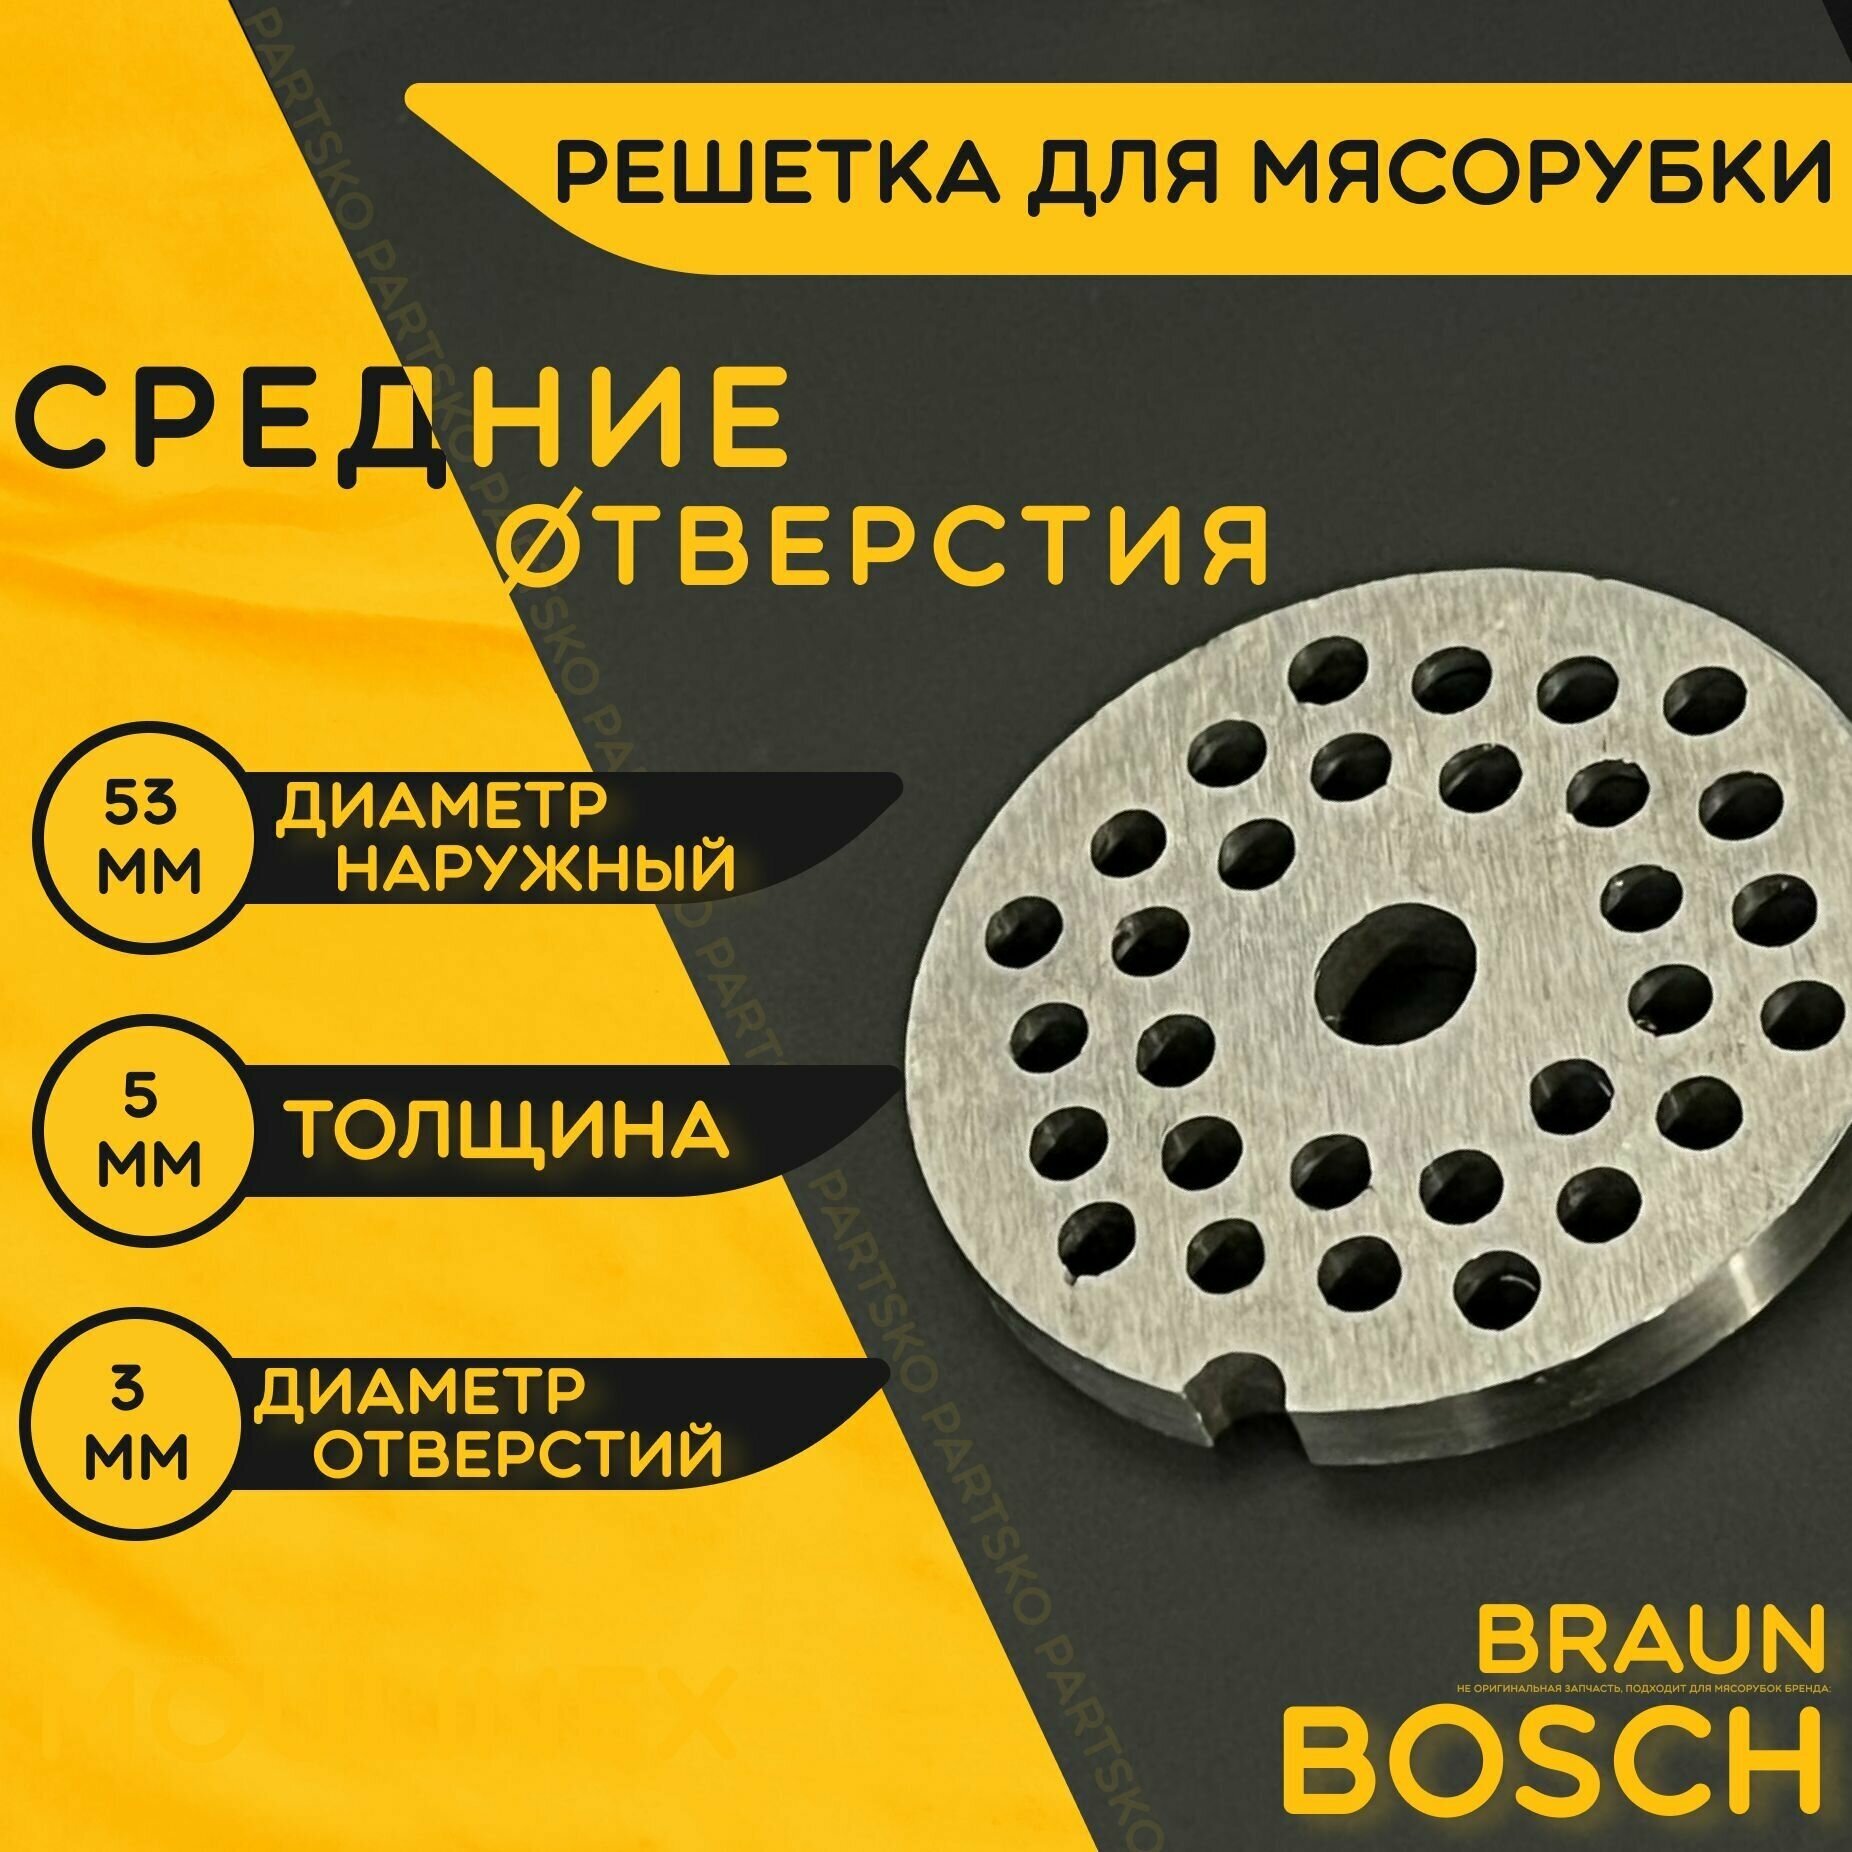 Решетка для мясорубки Бош Браун / электромясорубки и кухонного комбайна Bosch Braun. Диаметр наружный 53 мм / отверстий 4 мм.